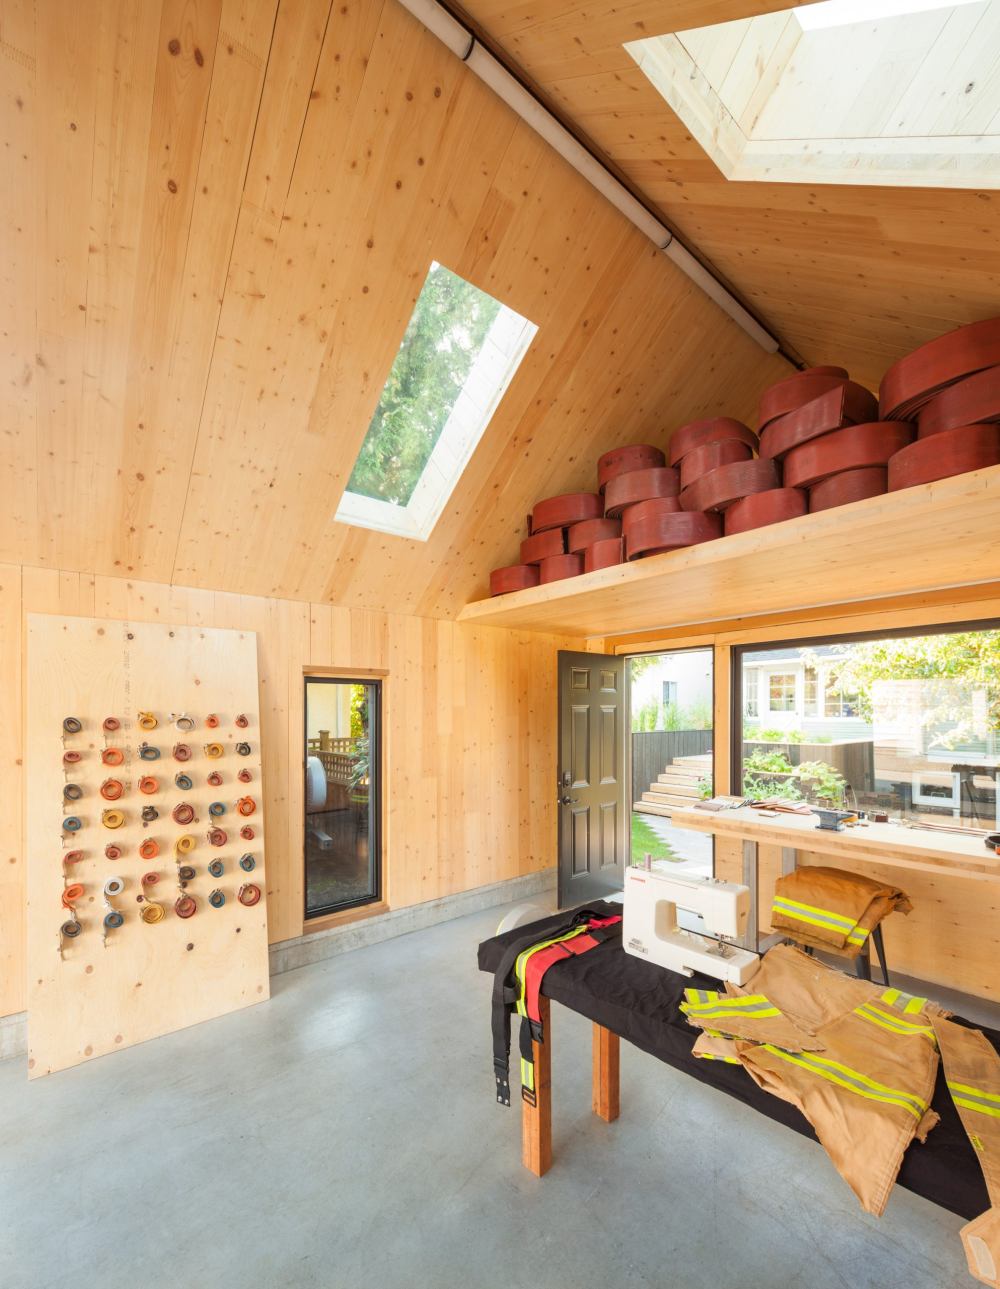 Vancouver practice Motiv Architects Garage Conversion craft room